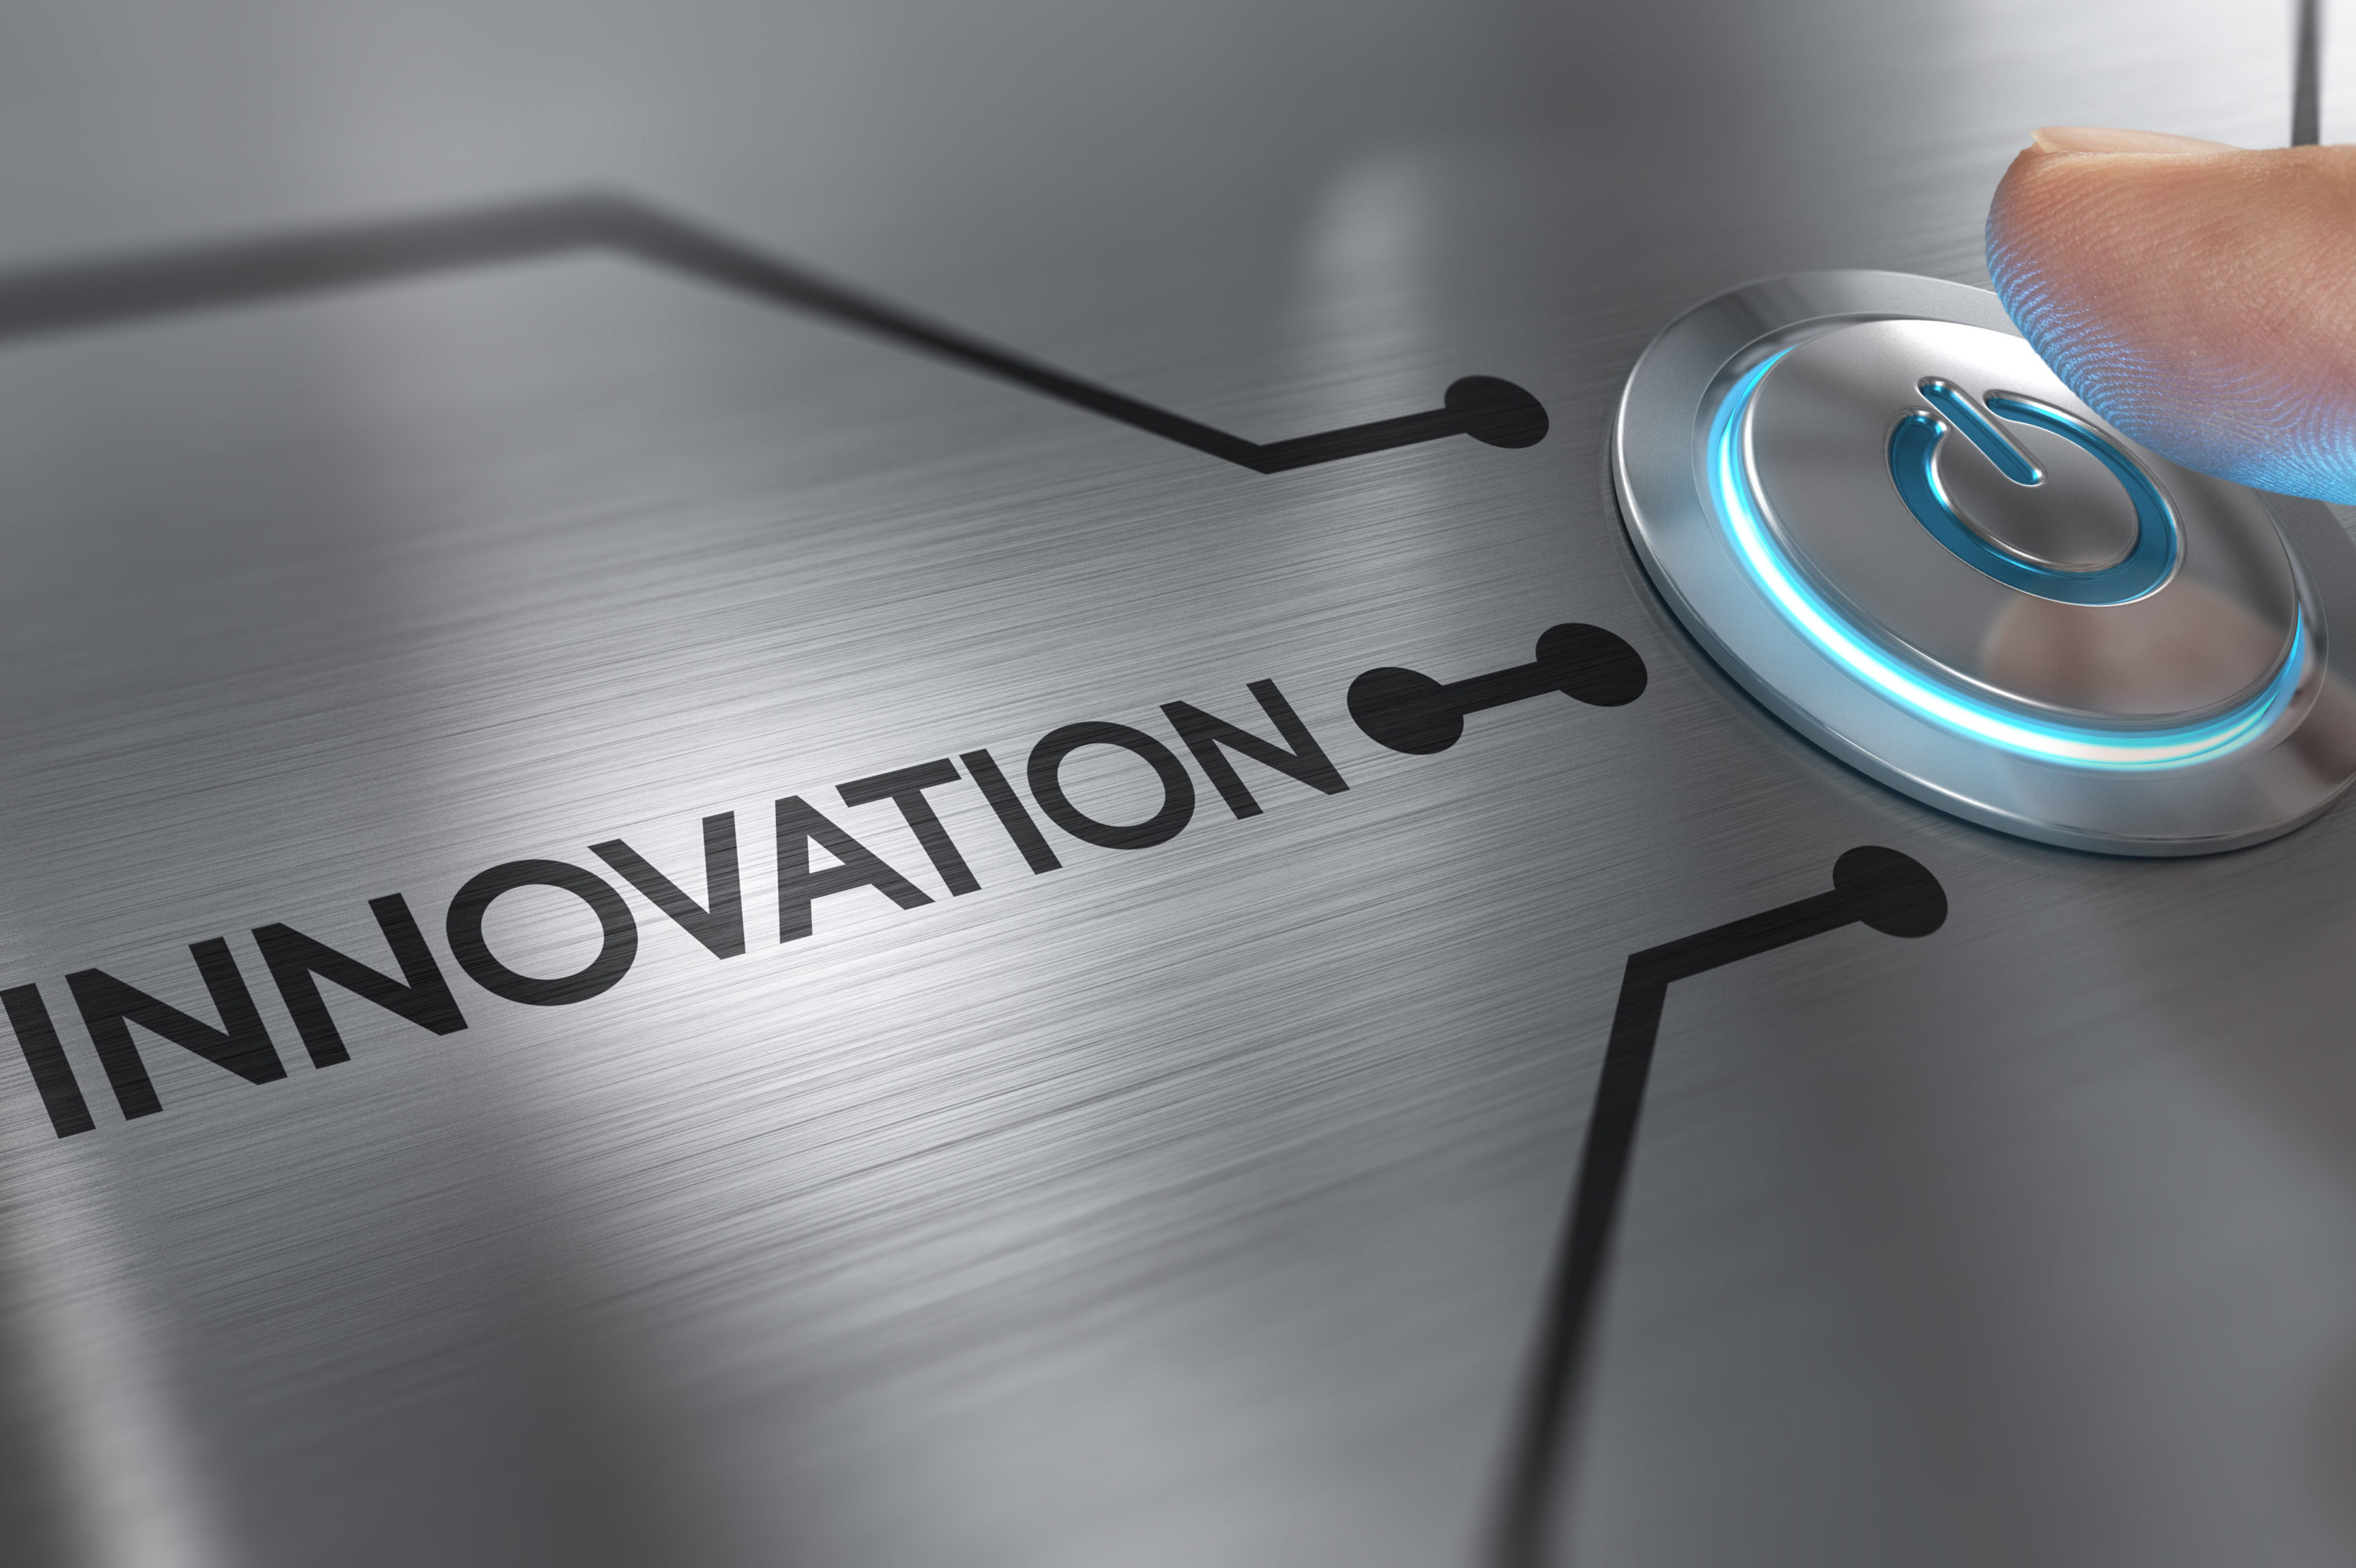 La parola "Innovation" sul tasto "Go". Innovazione